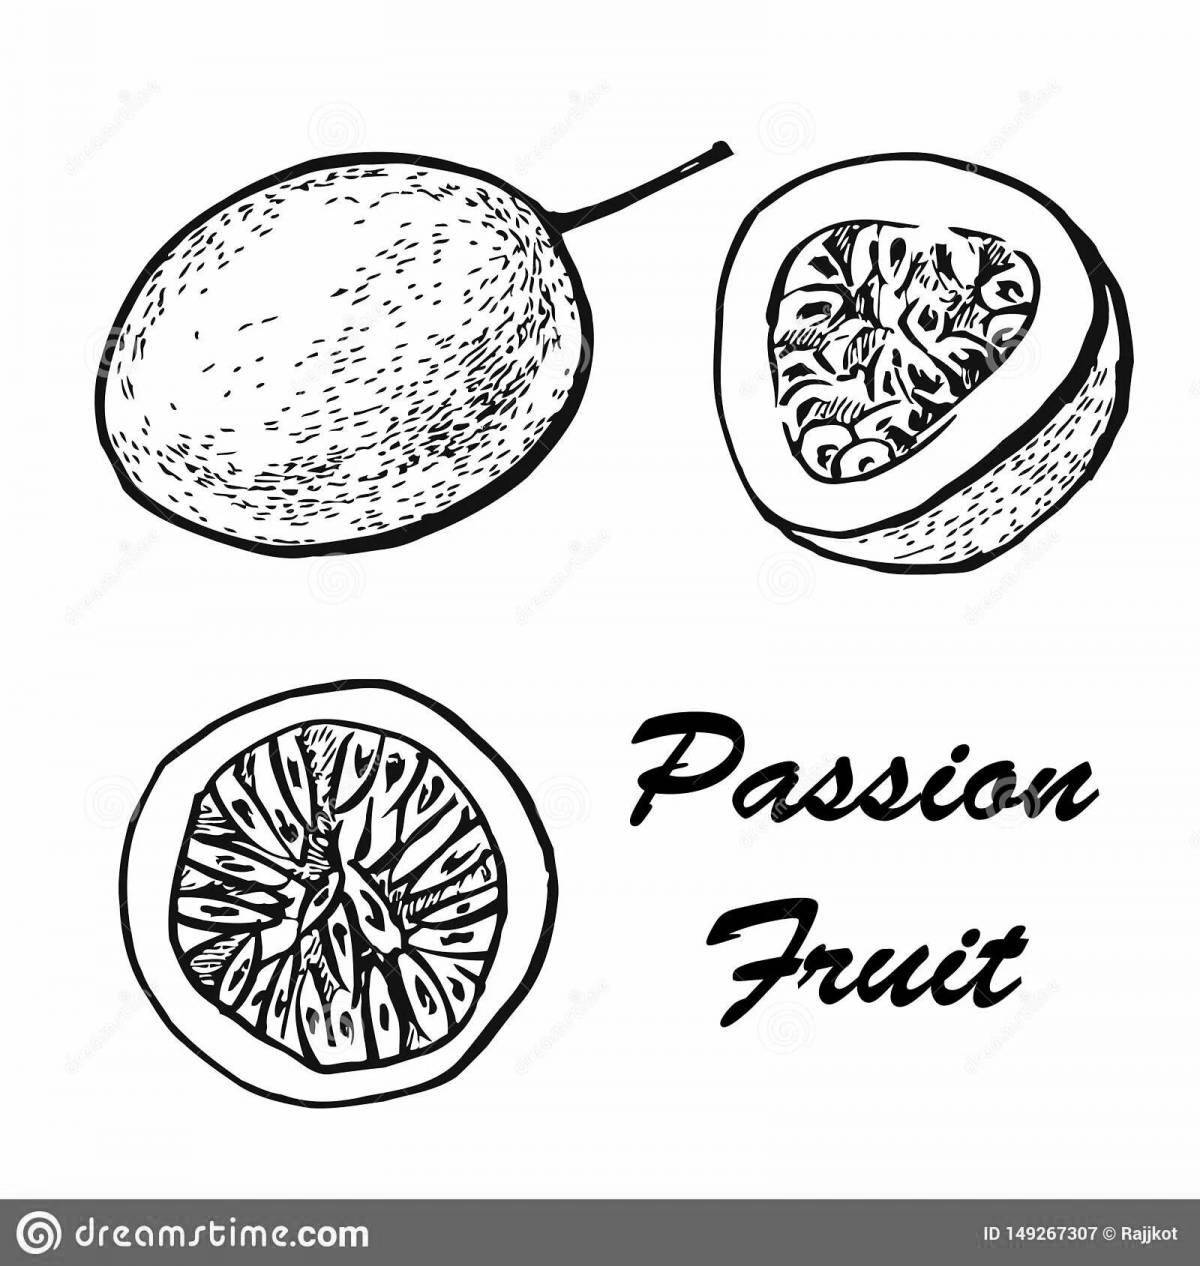 Exquisite passion fruit coloring book